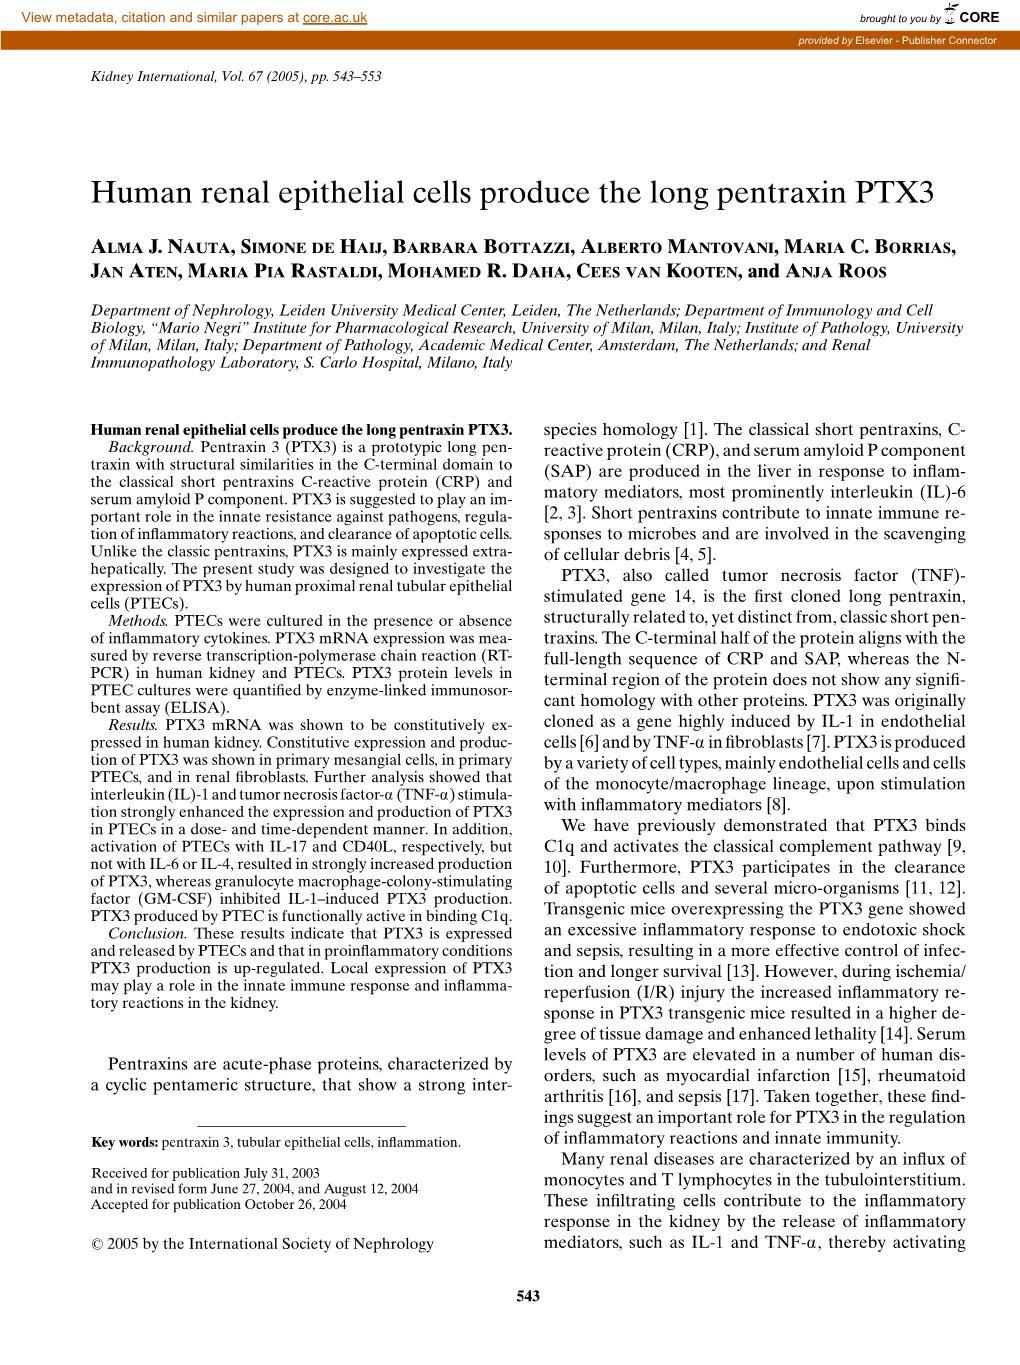 Human Renal Epithelial Cells Produce the Long Pentraxin PTX3